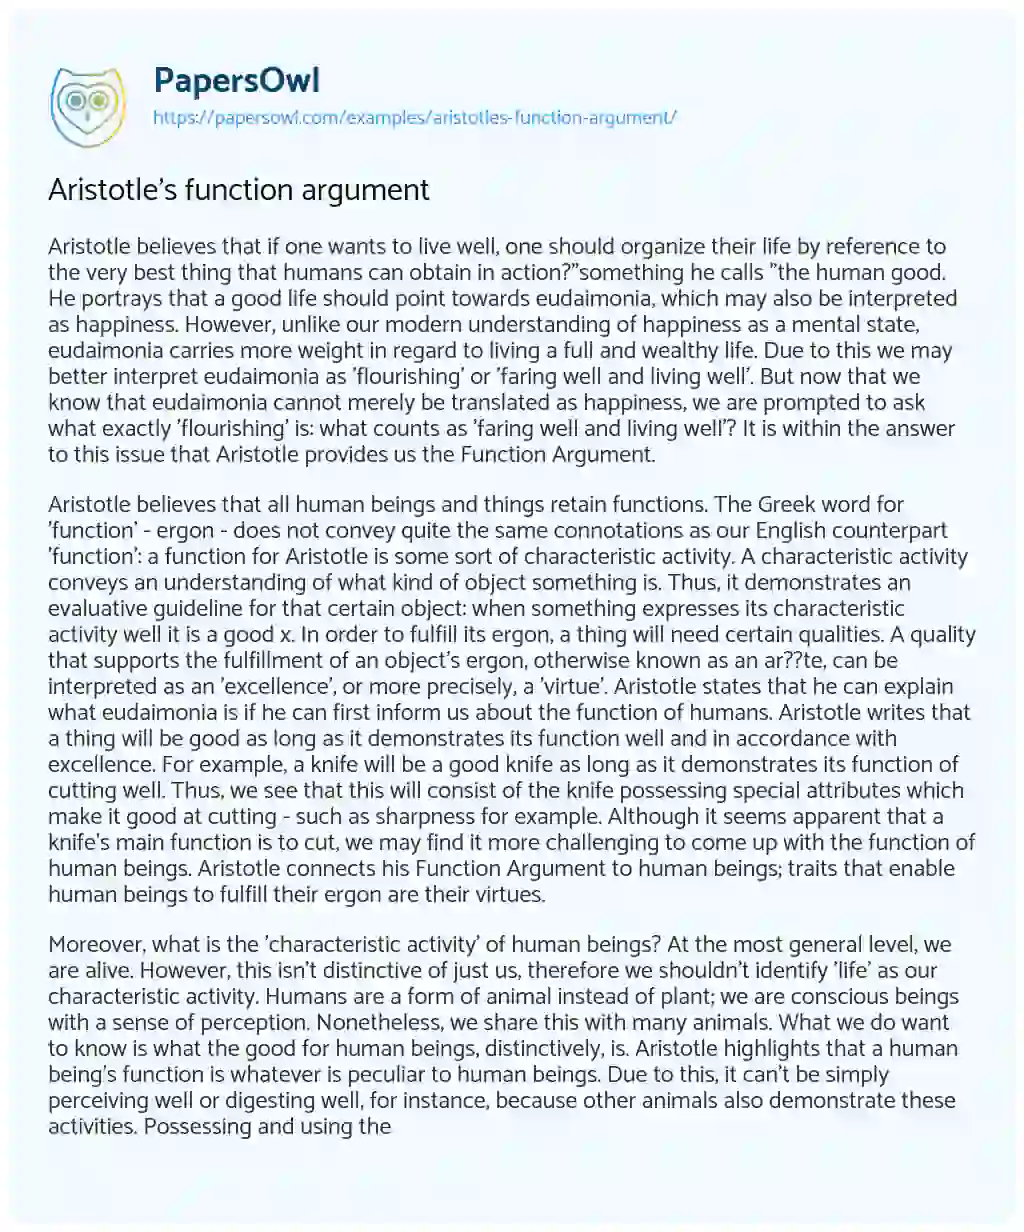 Essay on Aristotle’s Function Argument